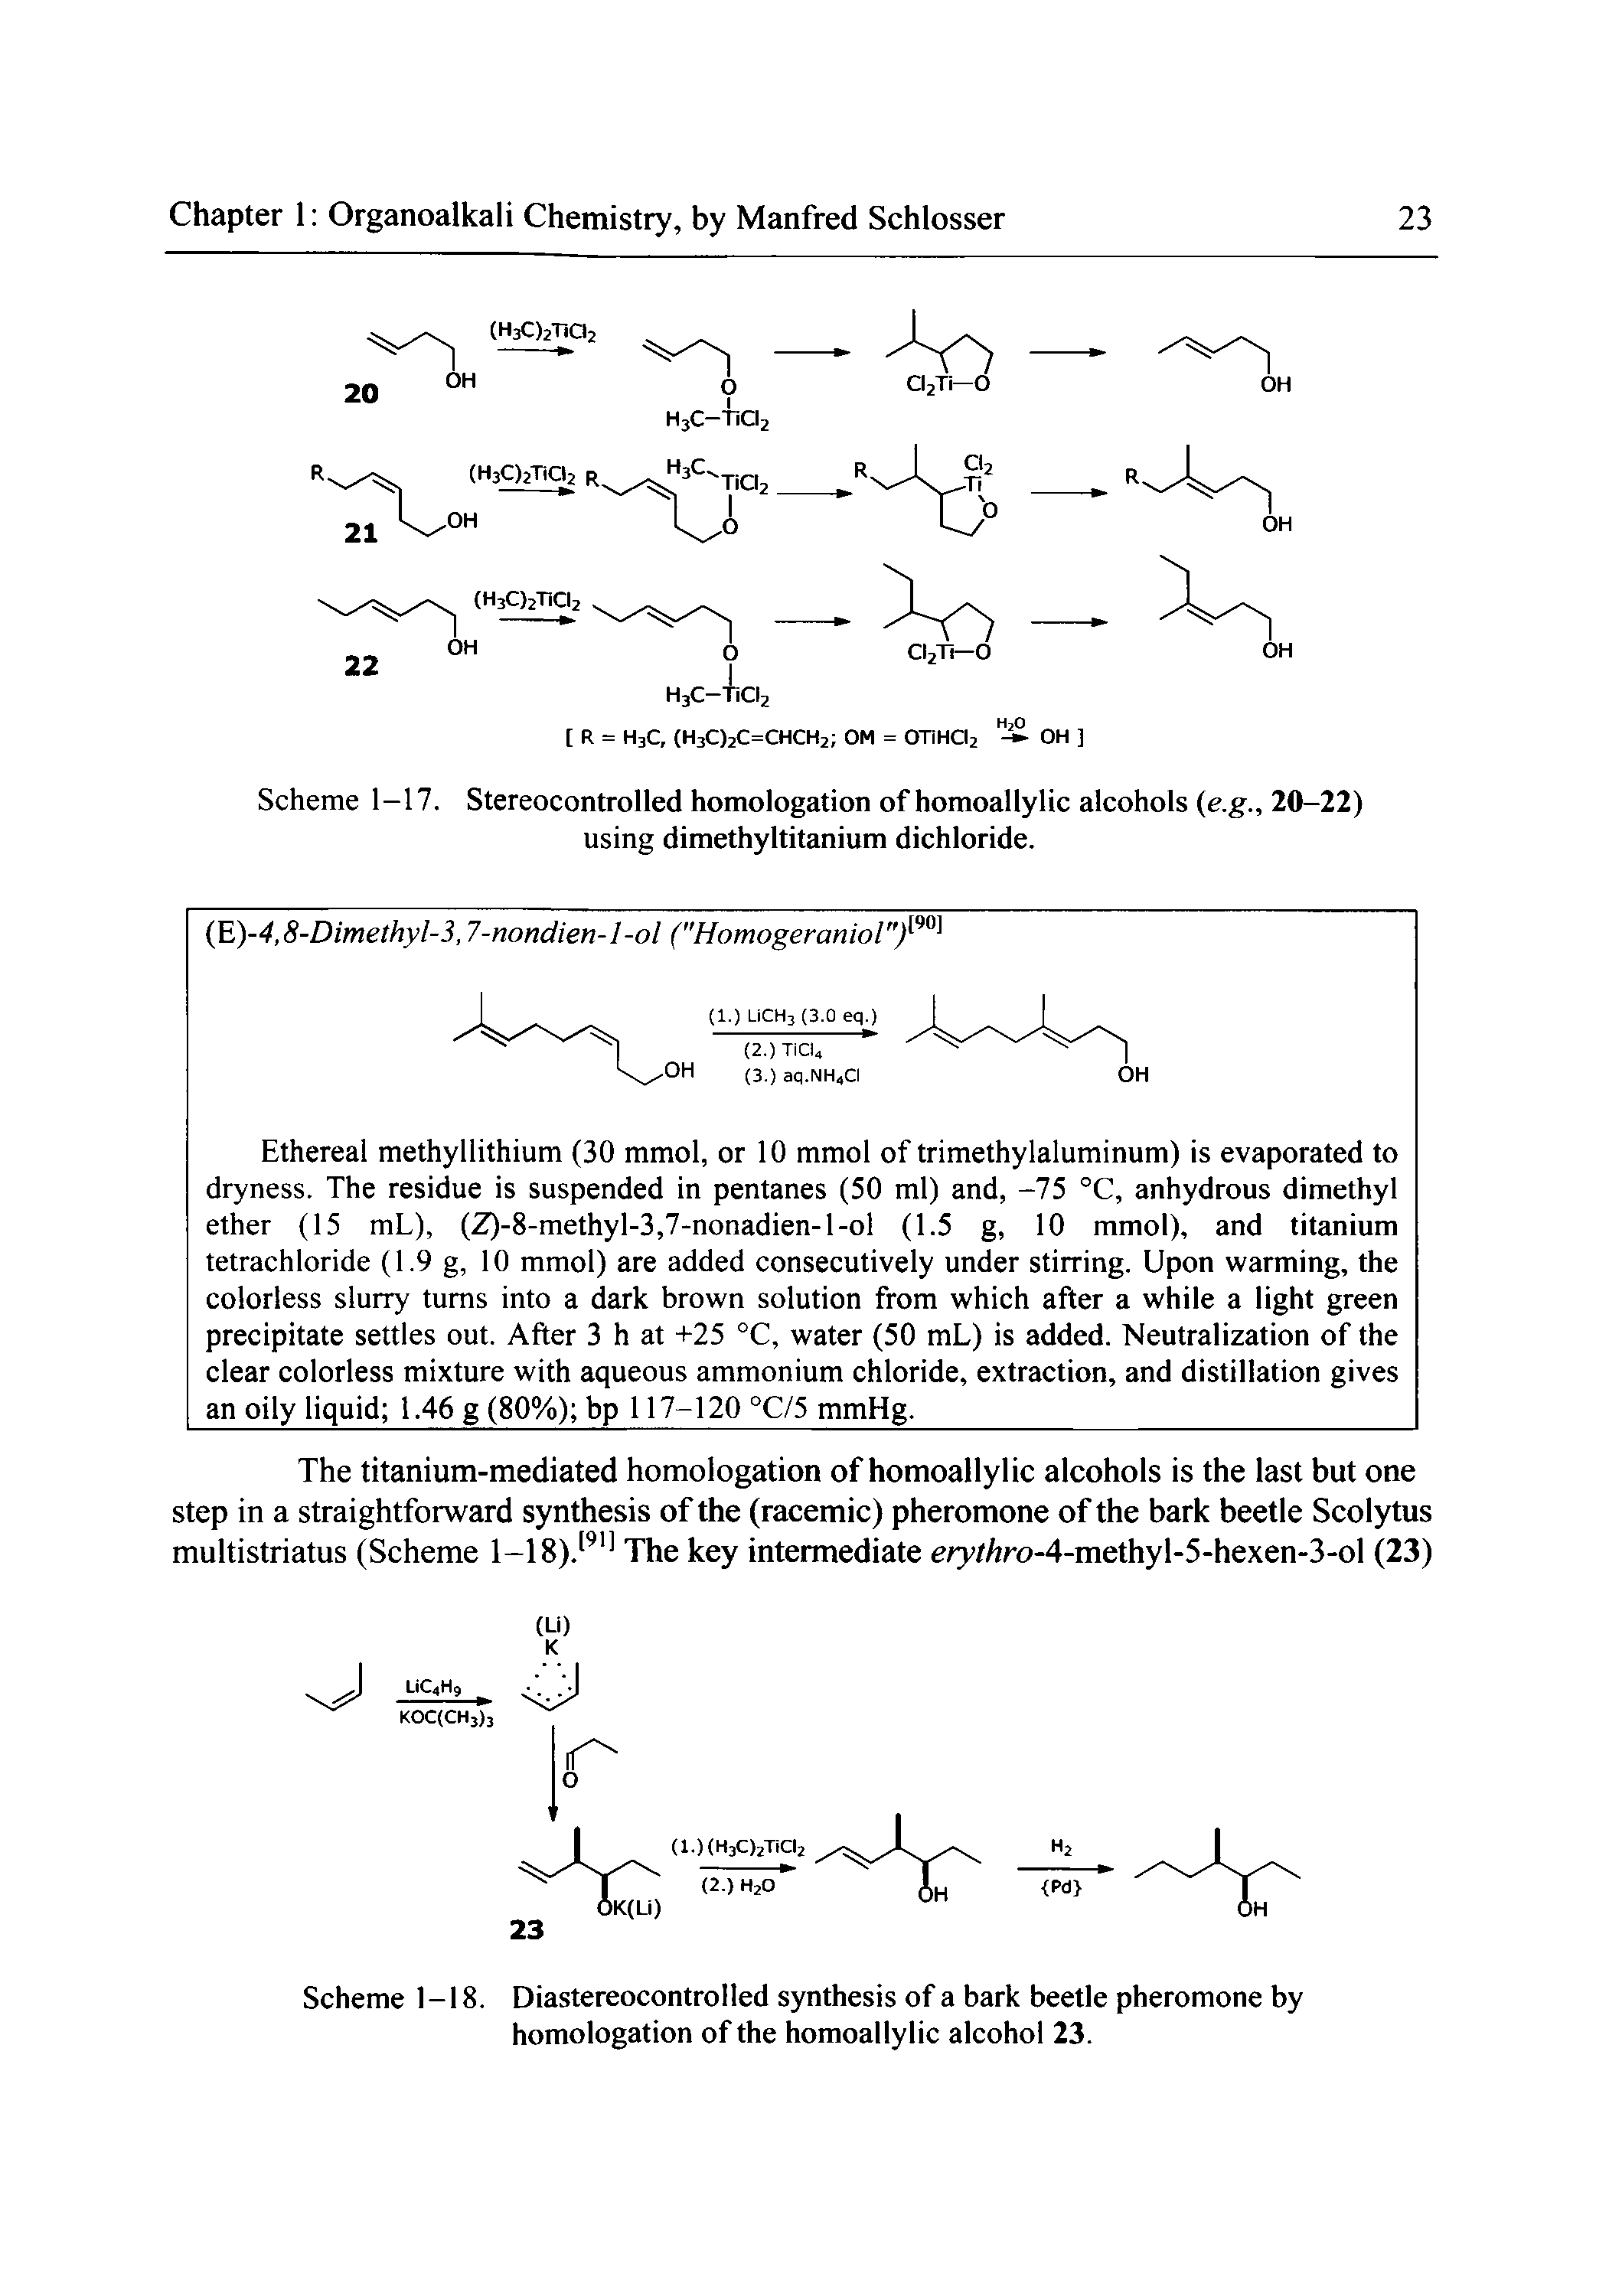 Scheme 1-17. Stereocontrolled homologation of homoallylic alcohols e.g., 20-22) using dimethyltitanium dichloride.